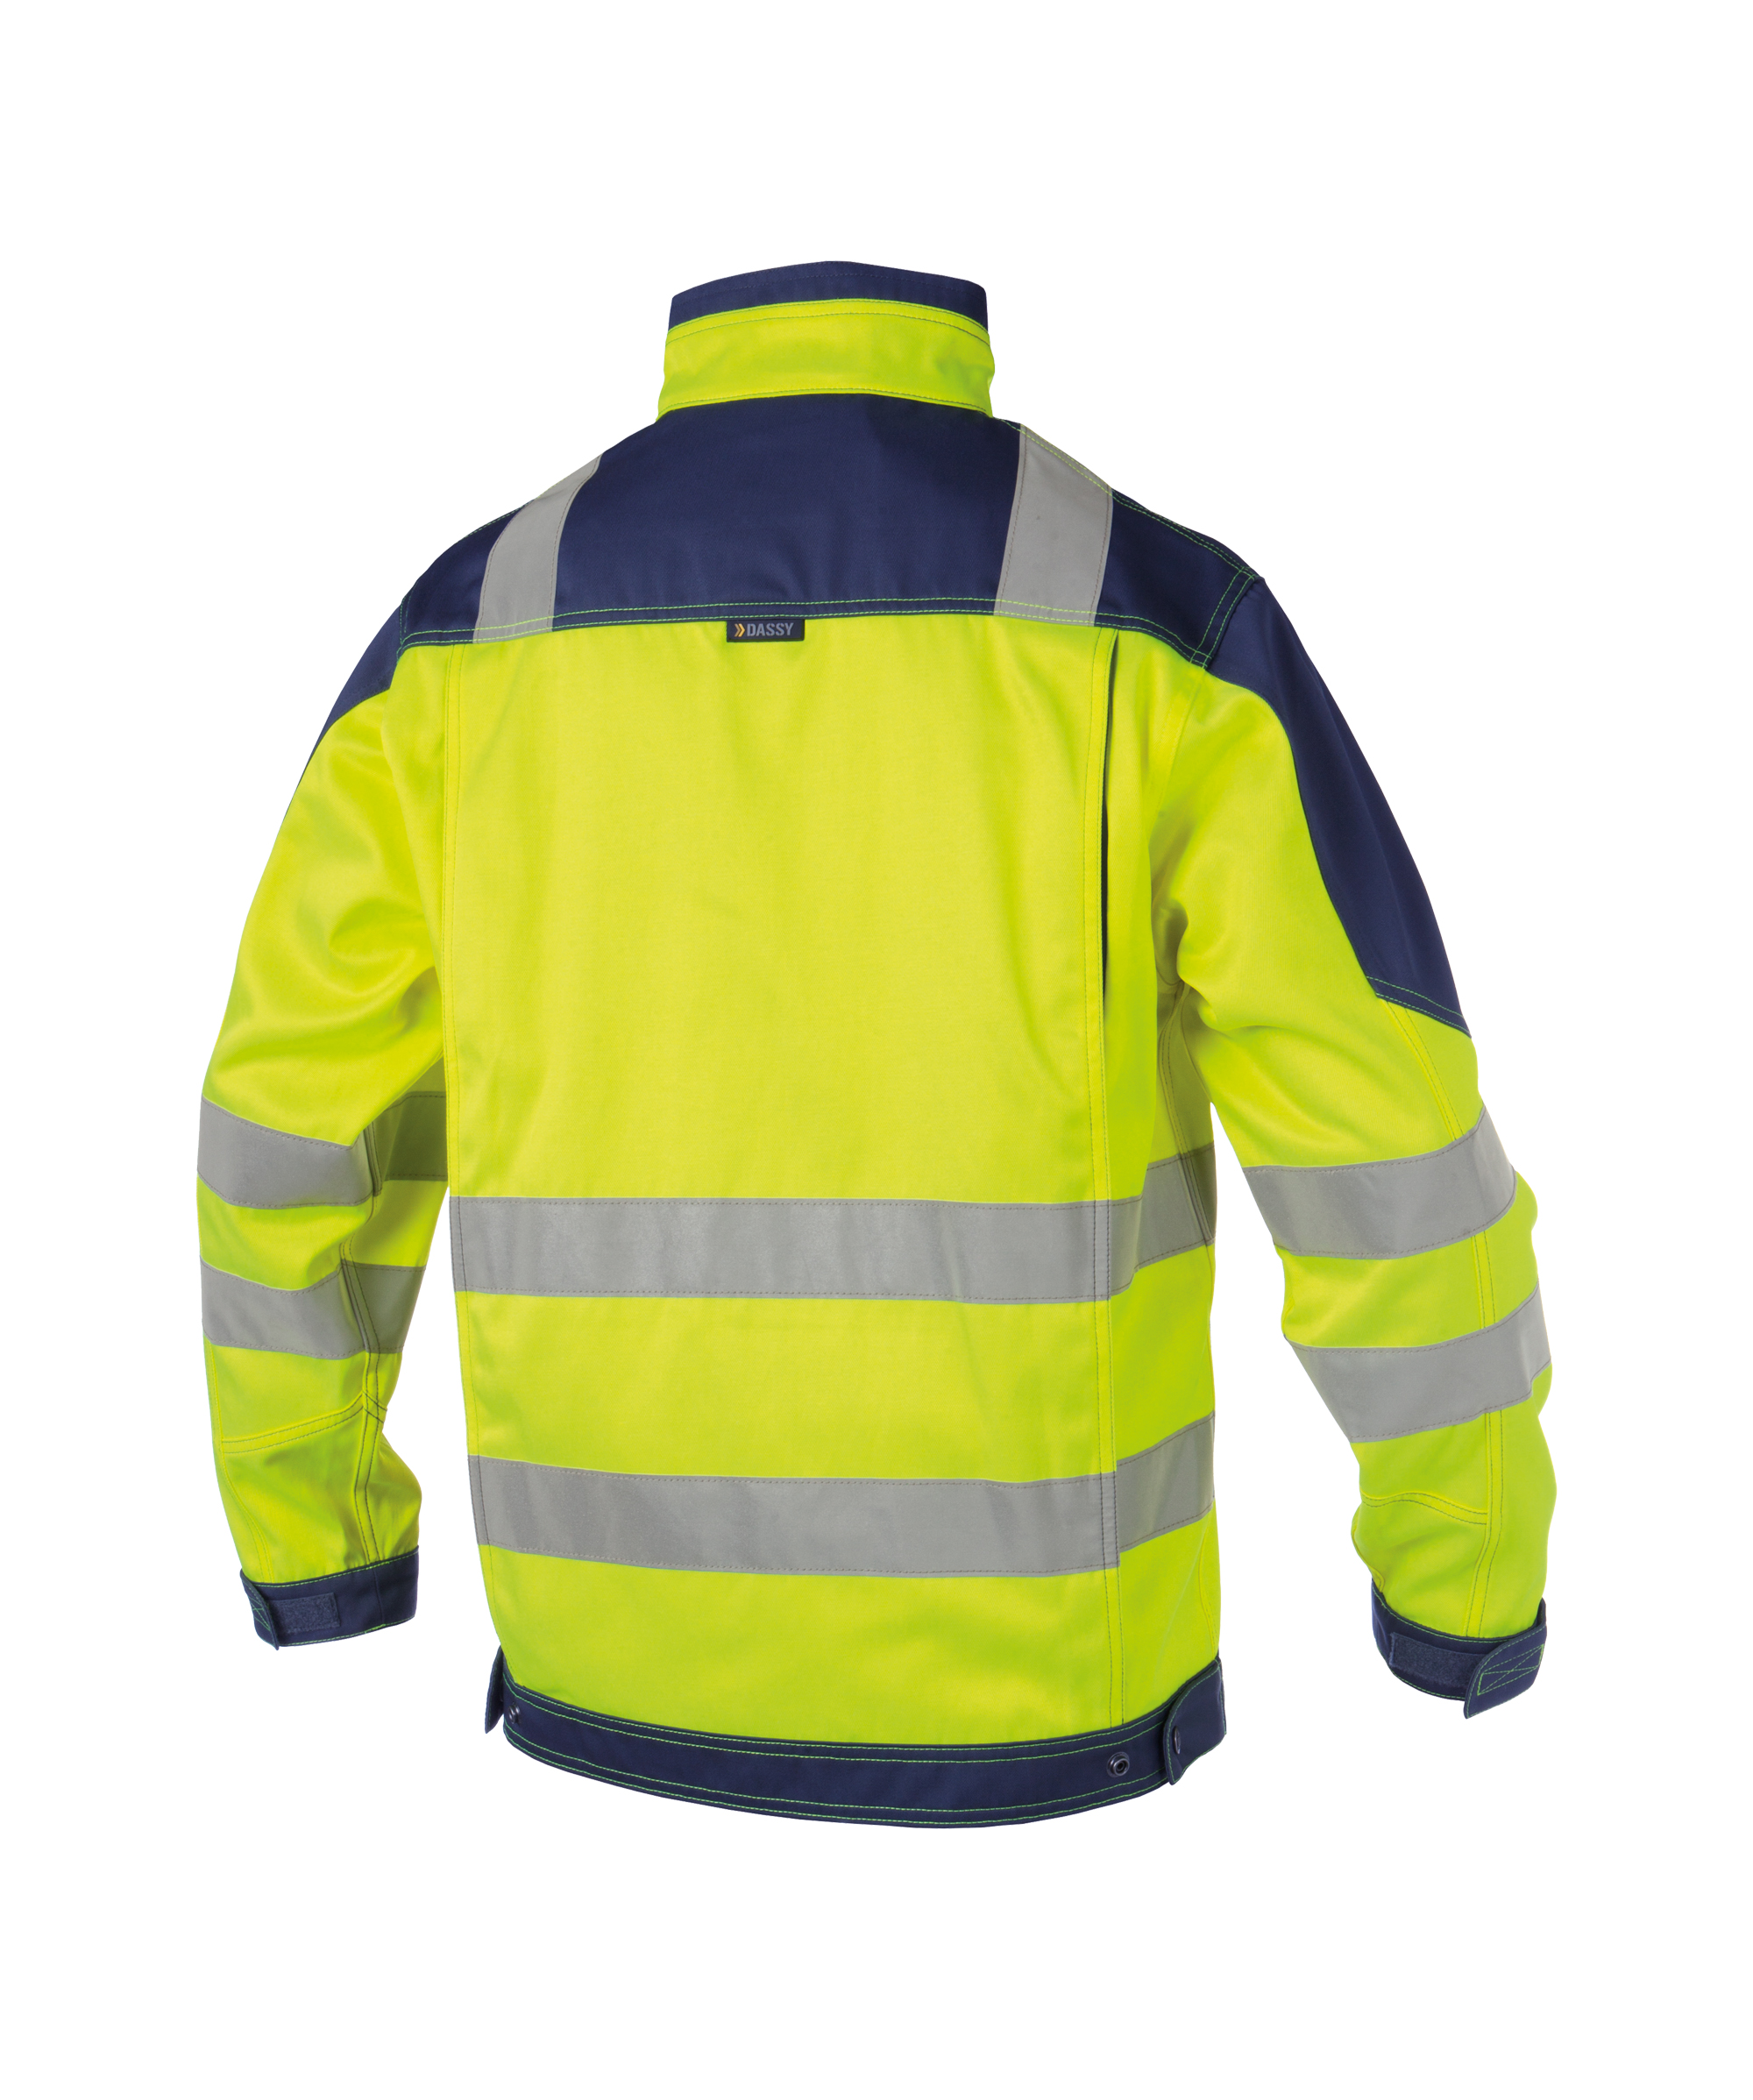 orlando_high-visibility-work-jacket_fluo-yellow-navy_back.jpg